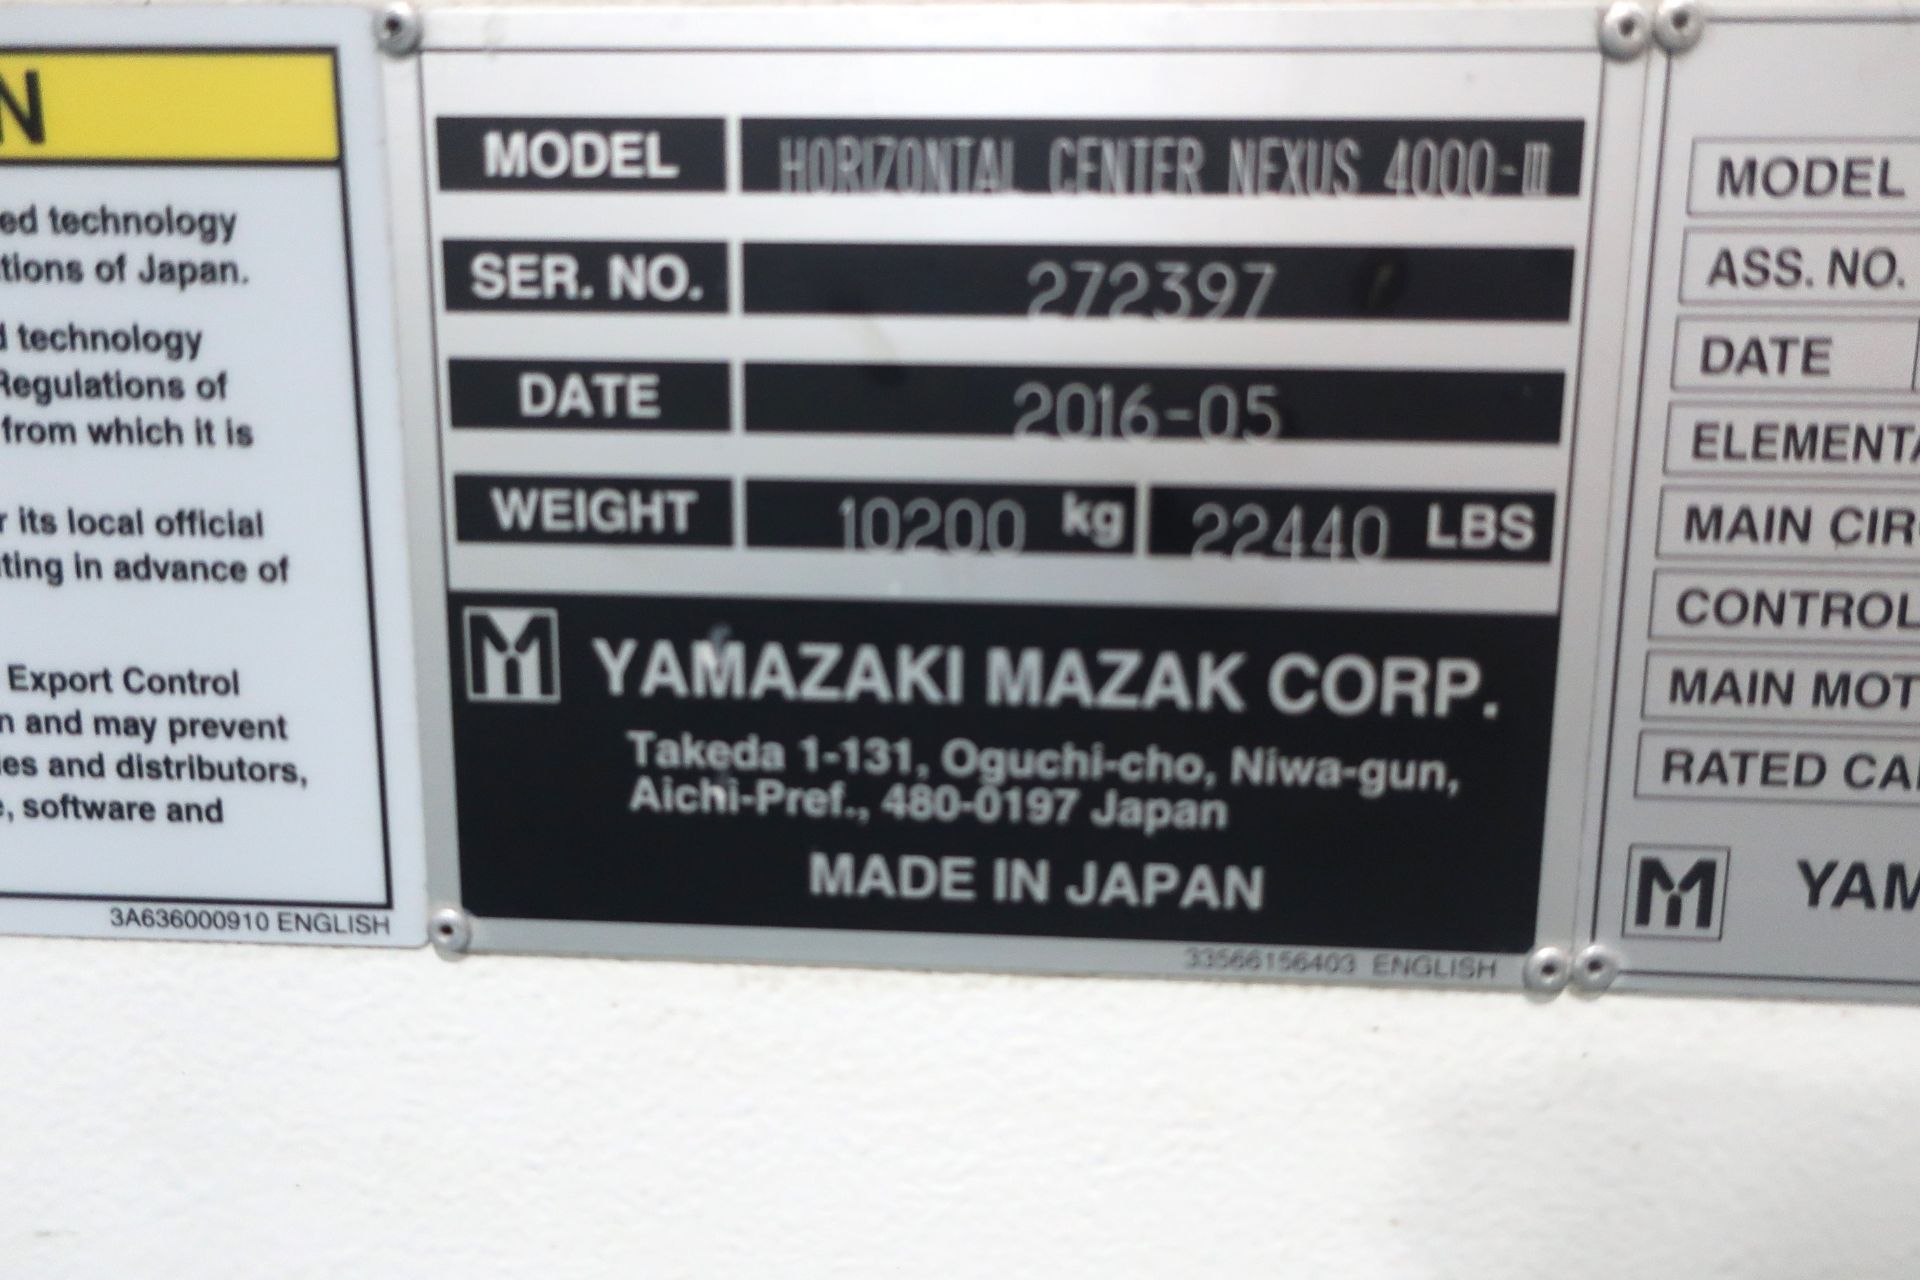 16"X16" MAZAK HCN NEXUS 4000-III 4-AXIS PRECISION HORIZONTAL MACHINING CENTER, S/N 272397 - Image 15 of 16